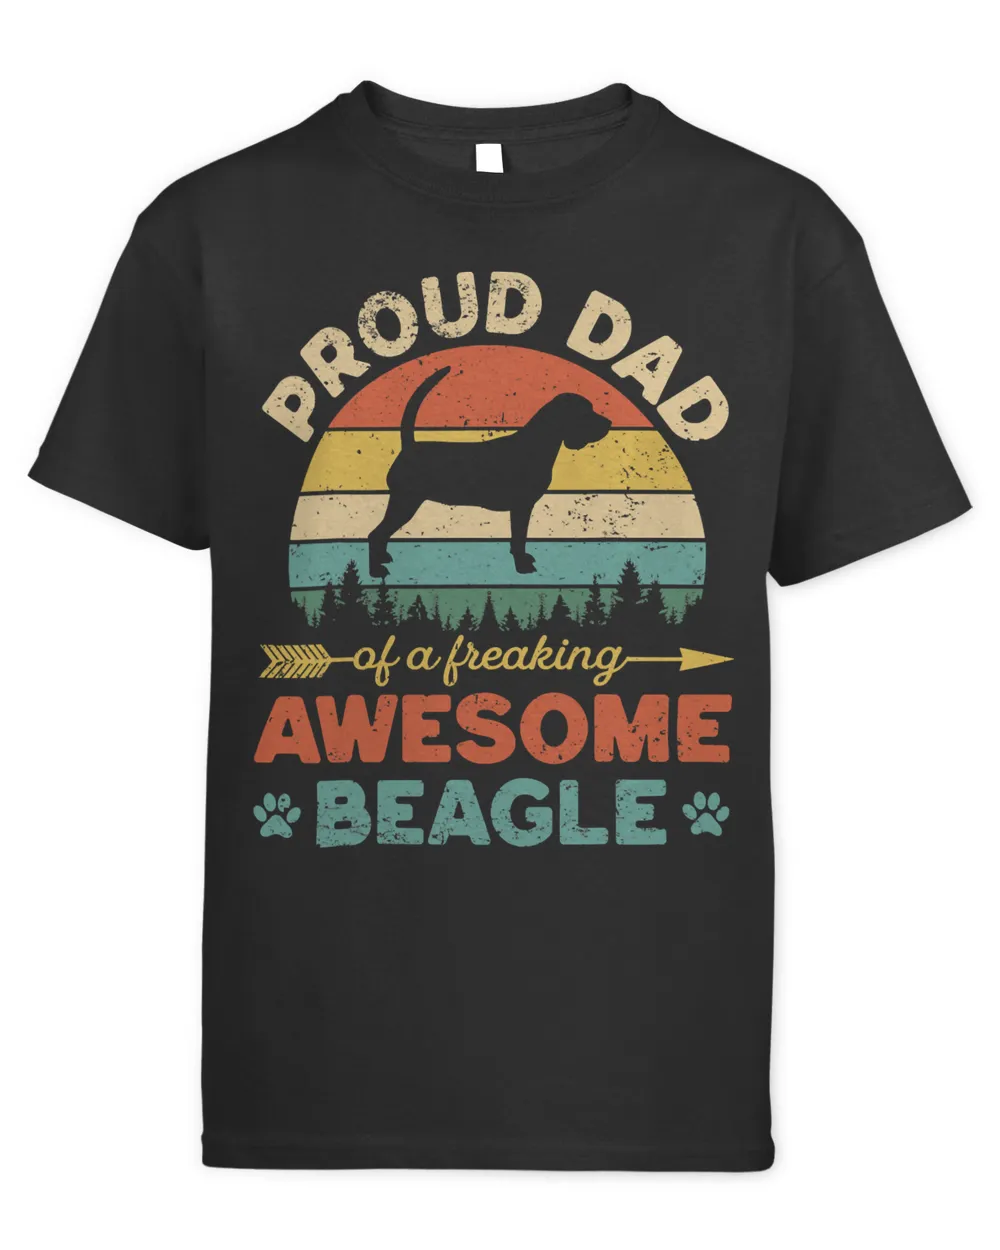 Beagle Dog Proud Beagle Dad Vintage Retro Dog Dad Present 100 Beagles